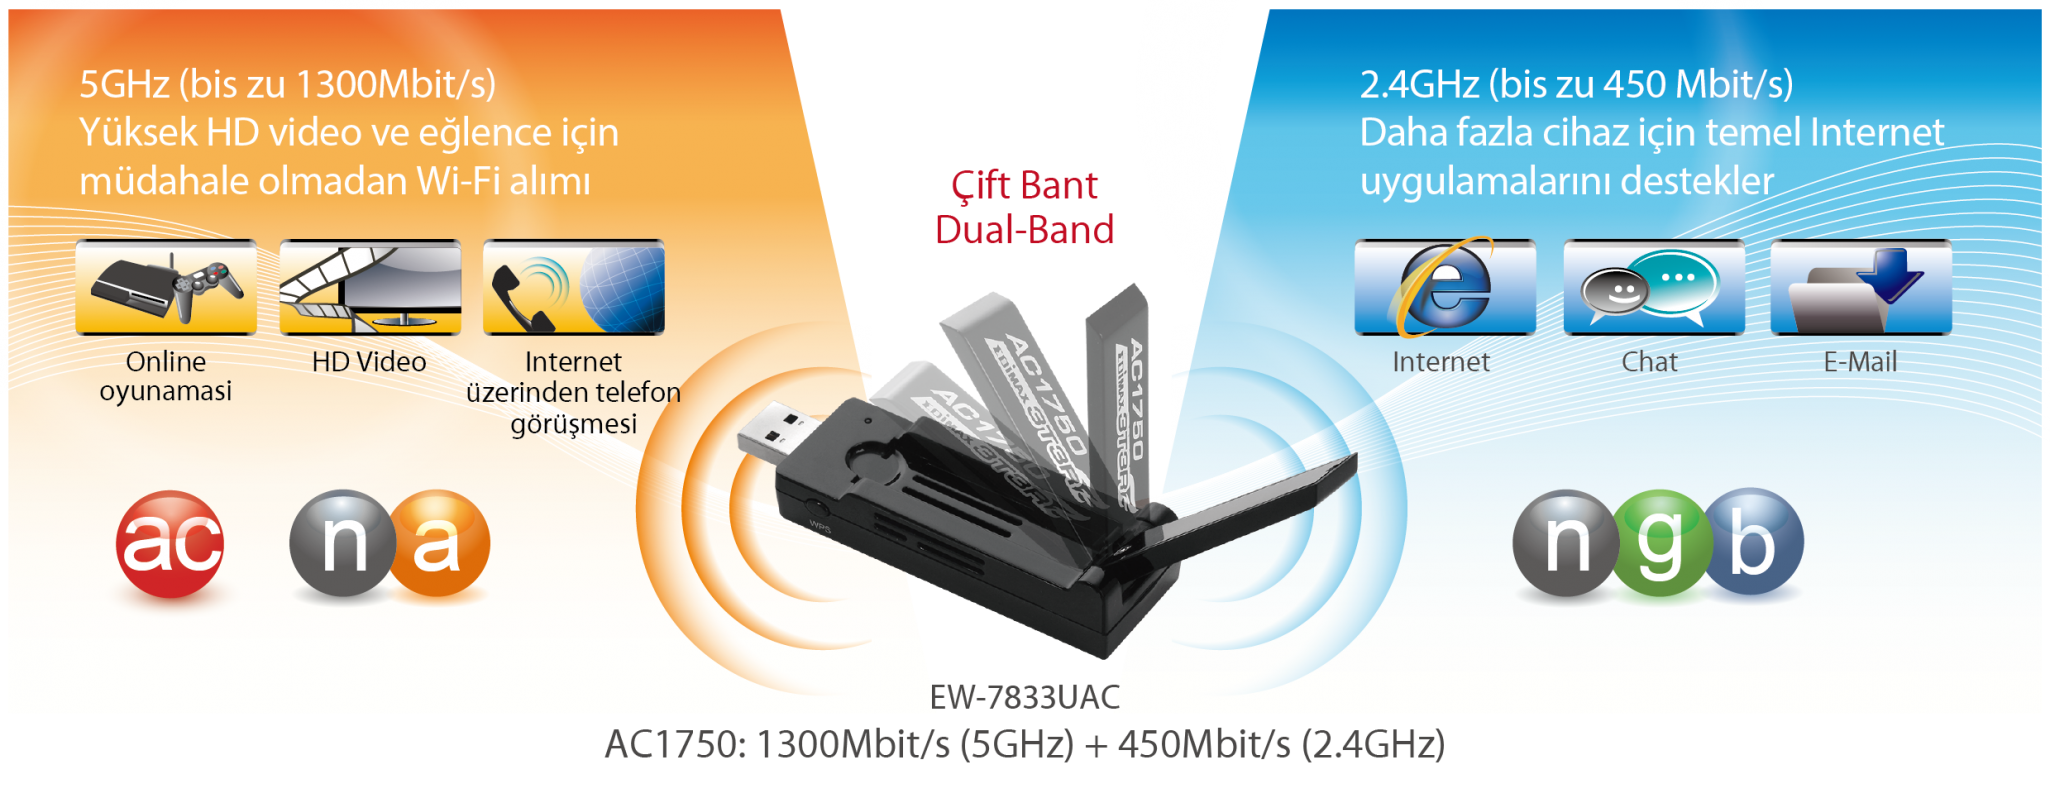 Edimax EW-7833UAC AC1750 Dual-Band Wi-Fi USB 3.0 Adapter with 180-degree Adjustable Antenna